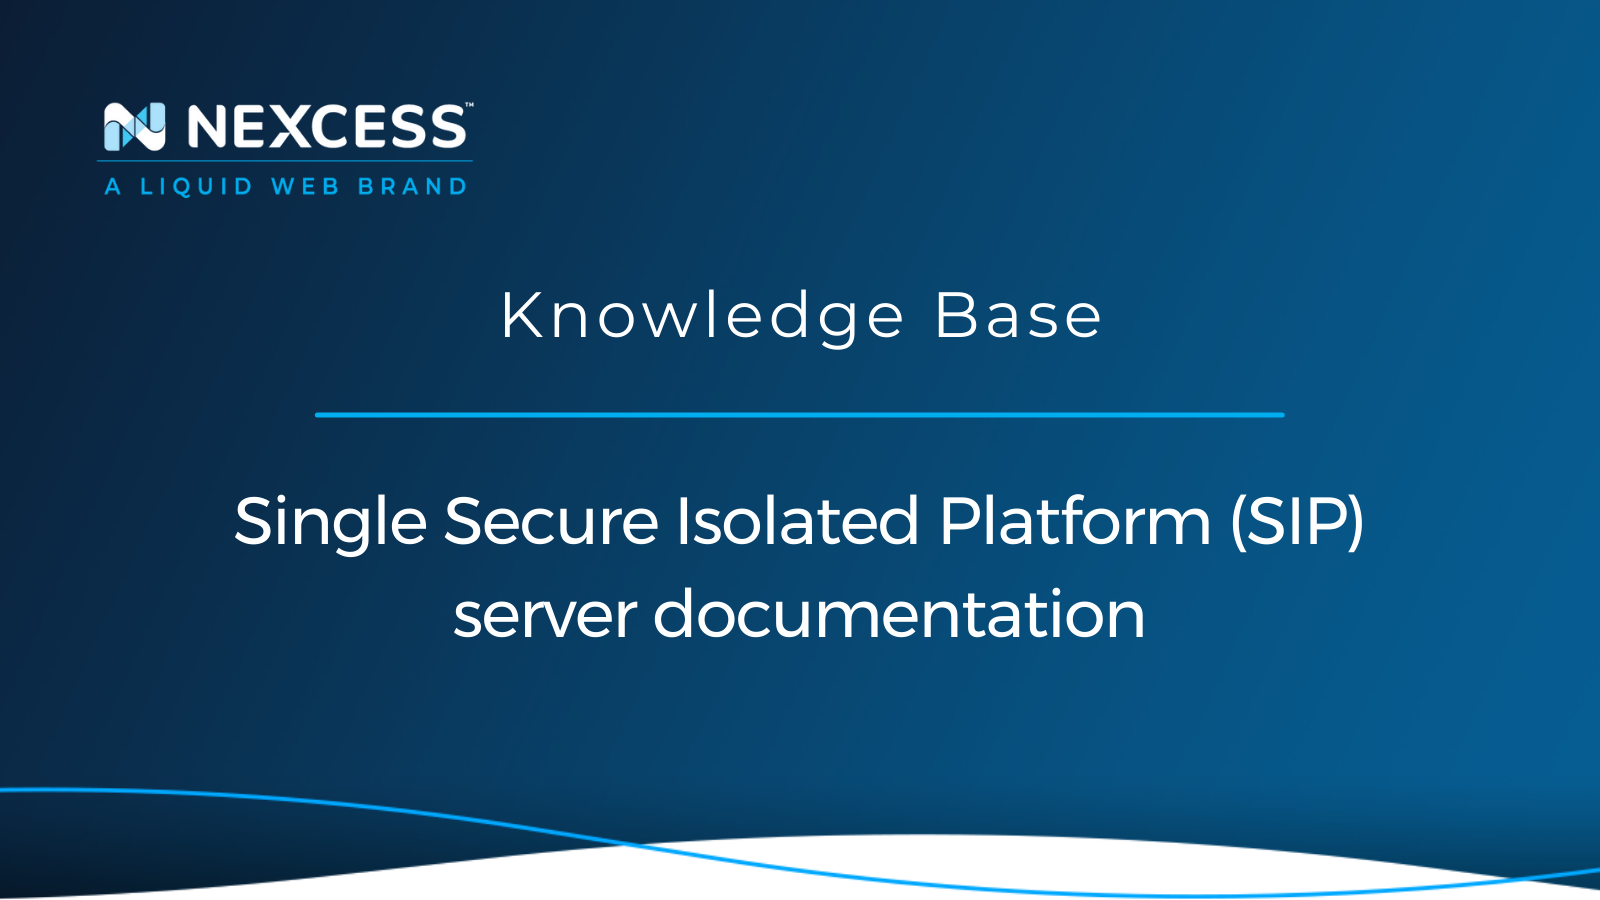 Single Secure Isolated Platform (SIP) server documentation